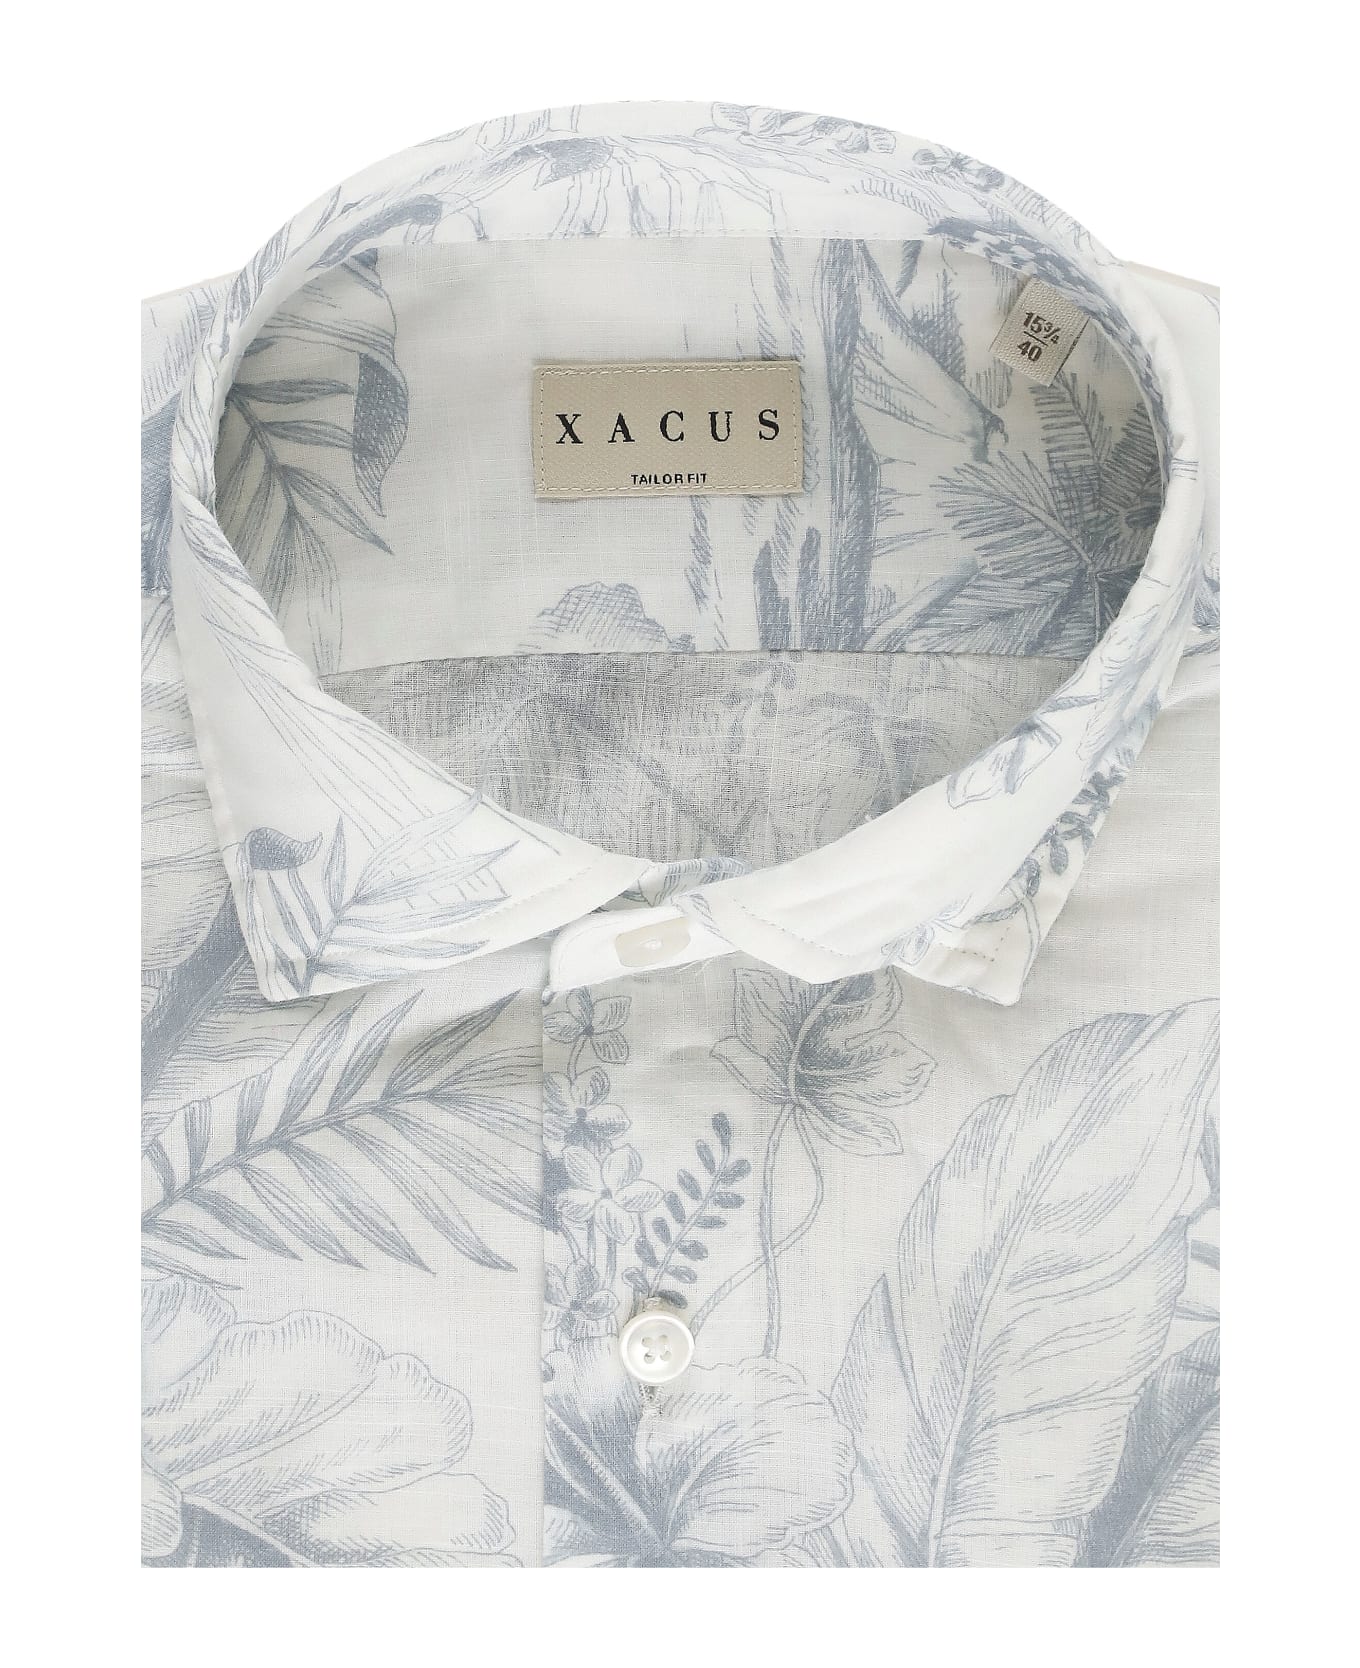 Xacus Tailor Shirt - White シャツ